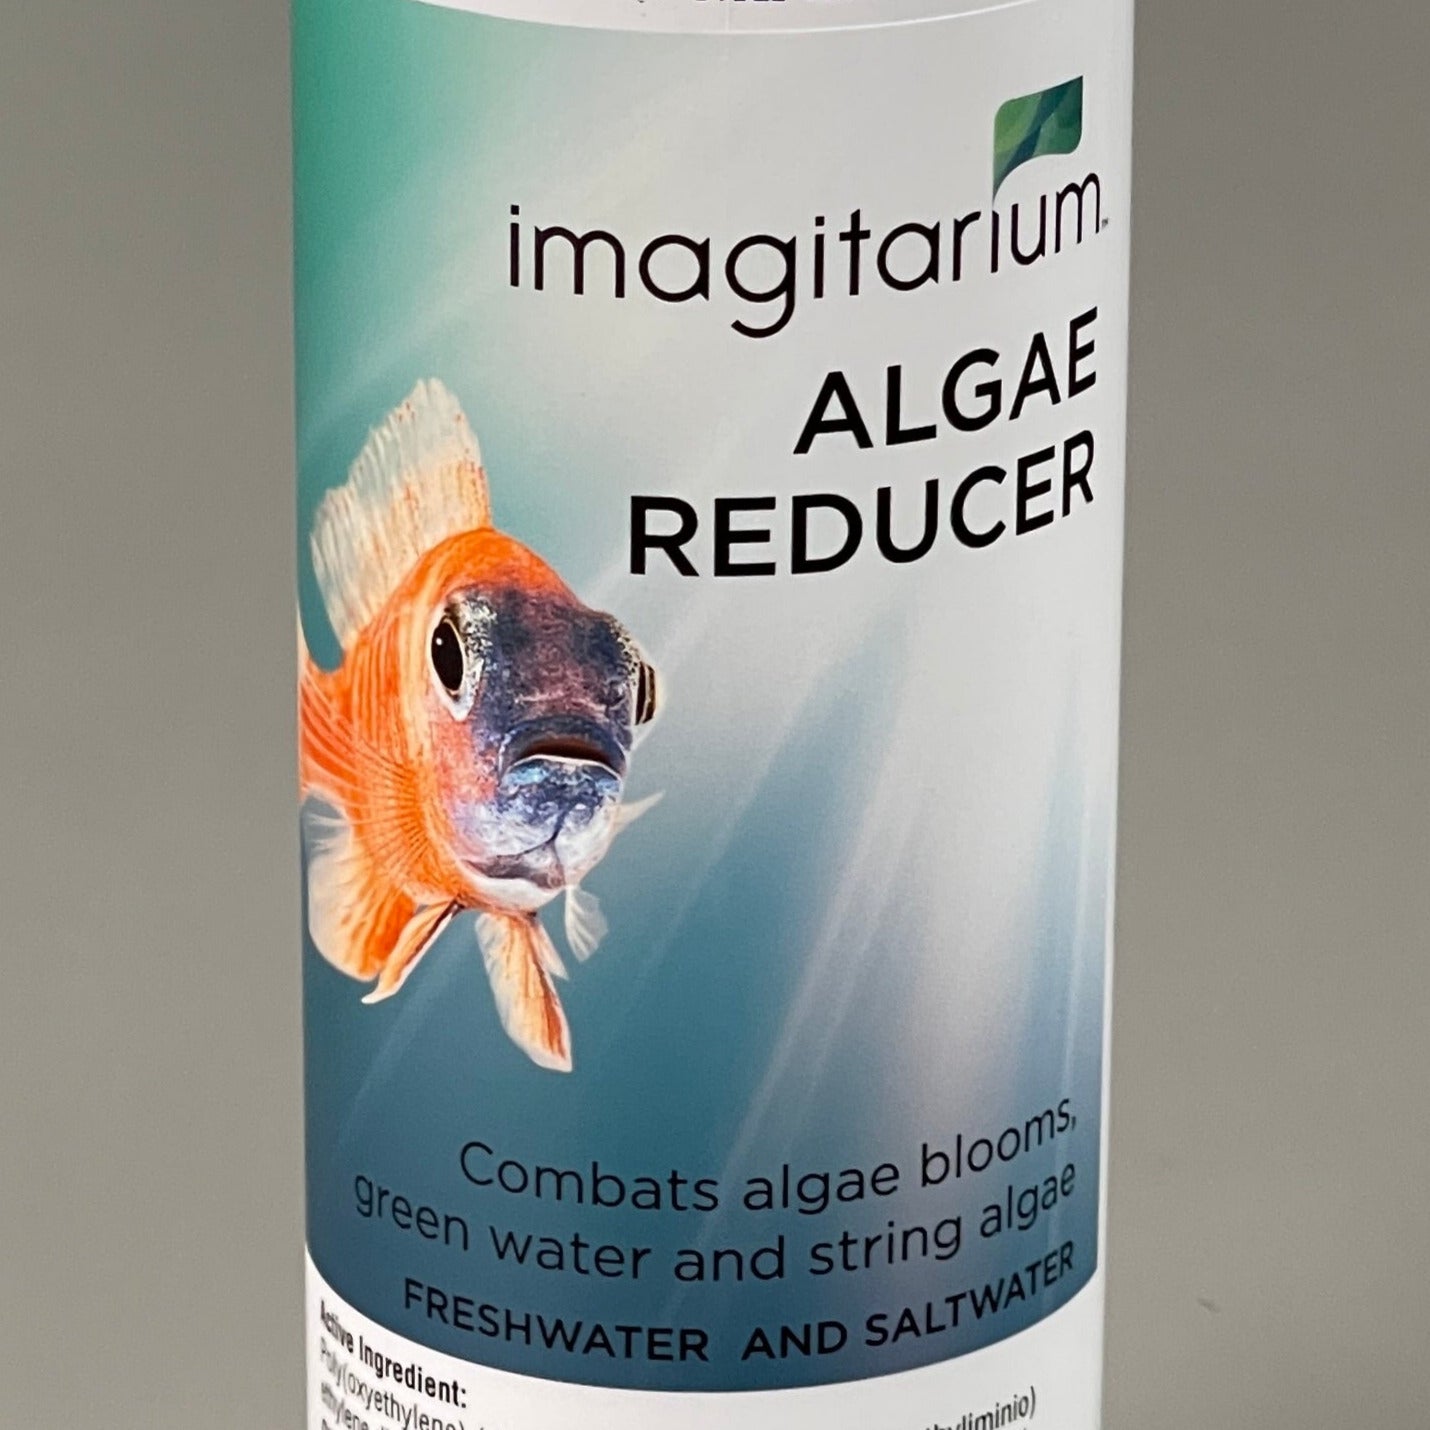 IMAGITARIUM Algae Reducer Combats Blooms, Green Water And String Algae 16 OZ 06/24 (New)